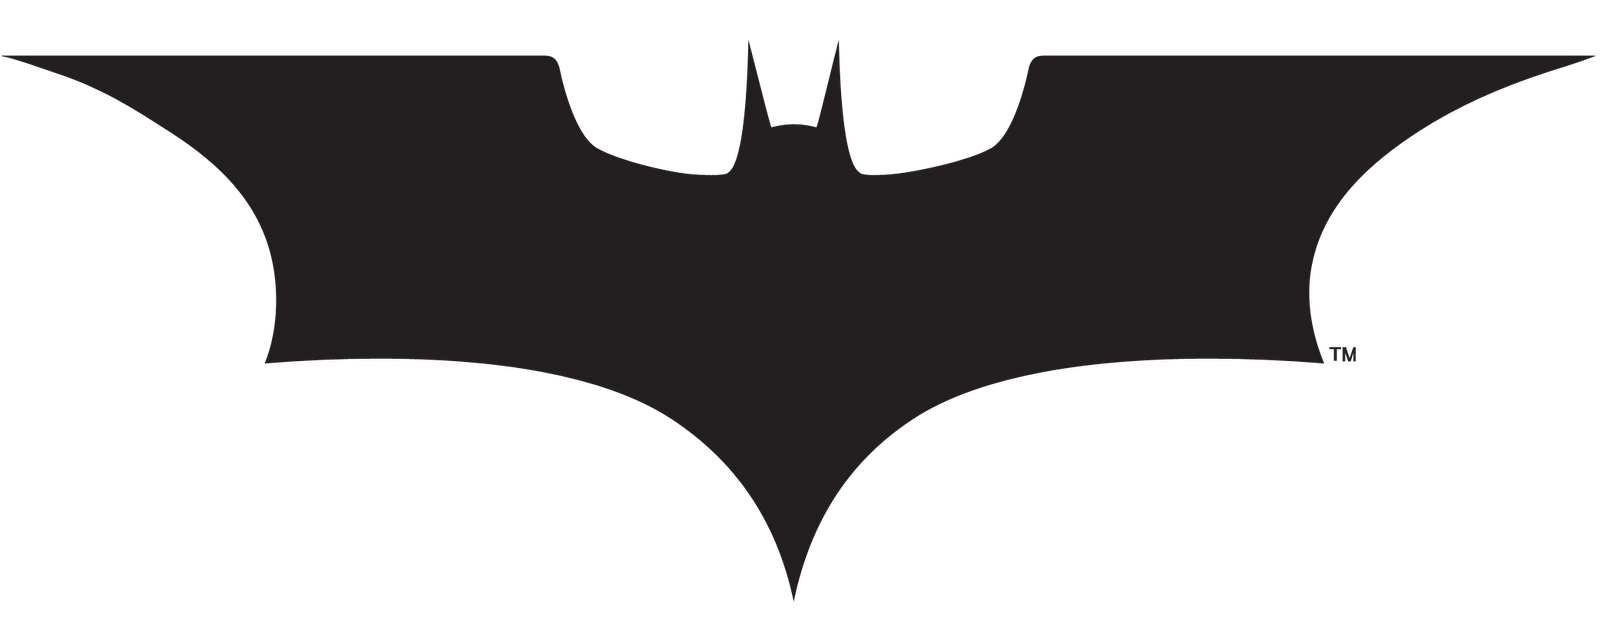 Batman Logo PNG - PNGBUY